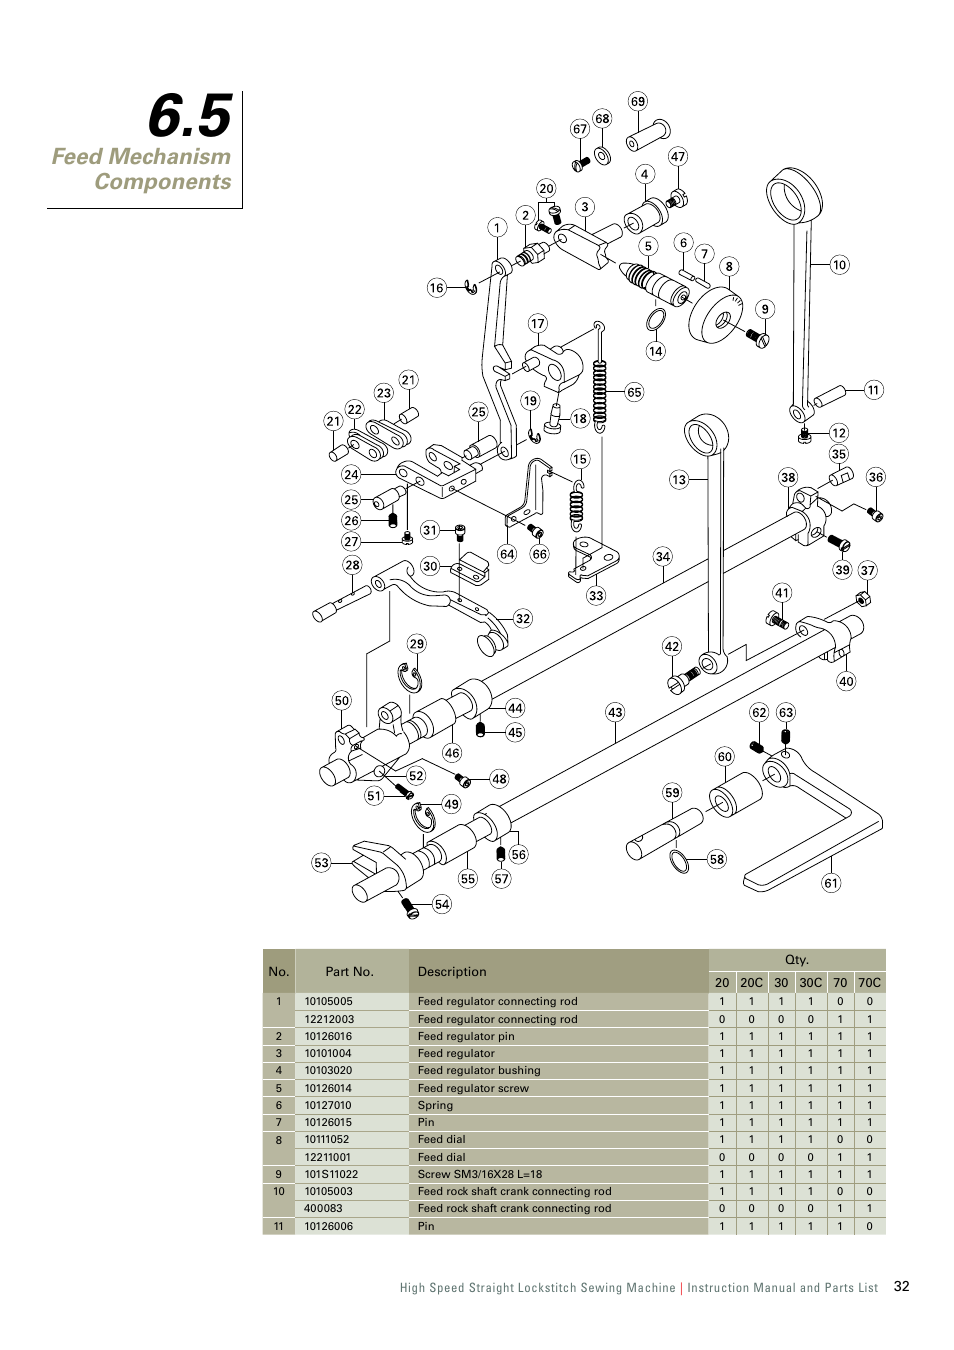 5 feed mechanism components, Feed mechanism components | SINGER 191D-30 User Manual | Page 35 / 45